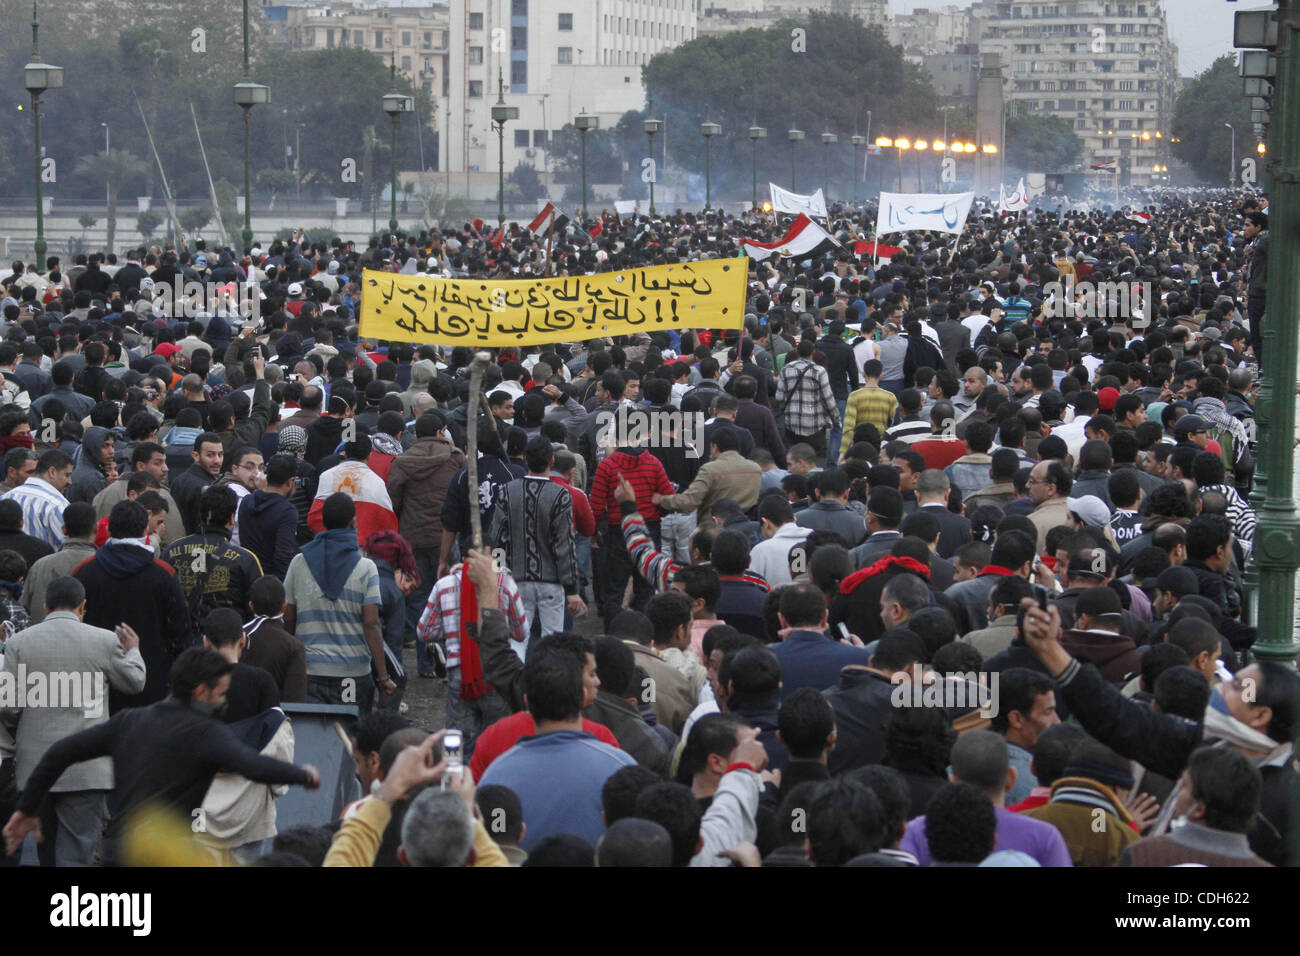 Anti-government protesters demonstrate against president Hosni Mubarak regime in Tahrir, or Liberation Square in Cairo, Egypt, Jan. 29, 2011. Photo by Karam Nasser Stock Photo